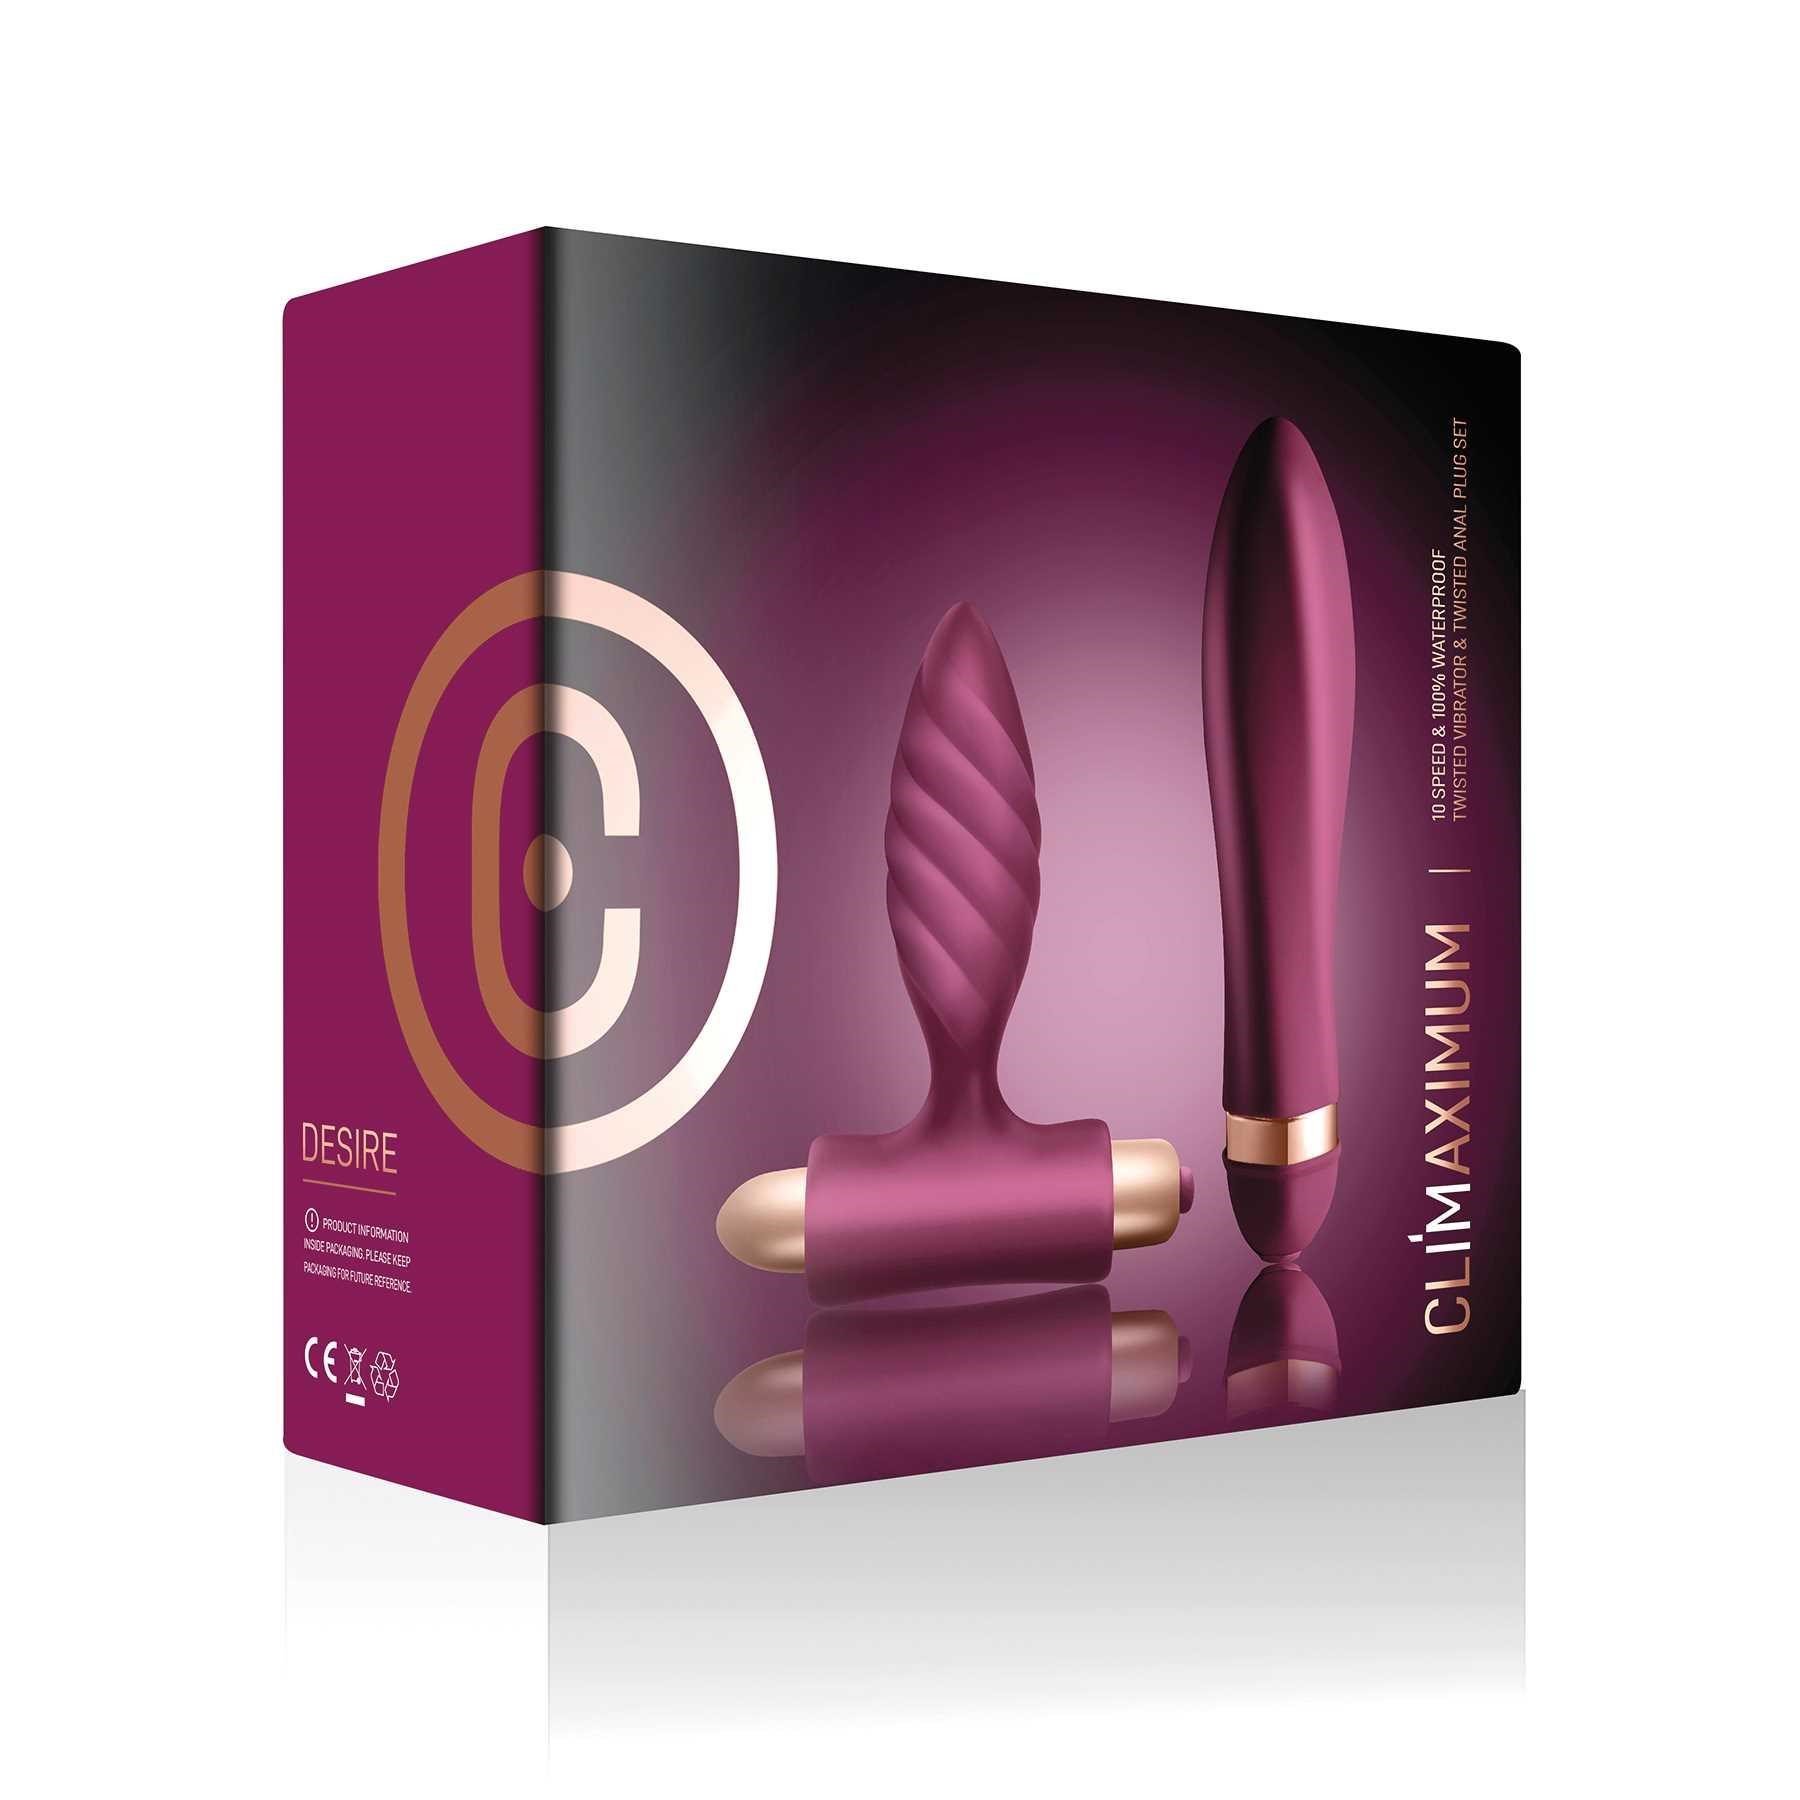 Climaximum Desire Couples Vibrator Kit packaging